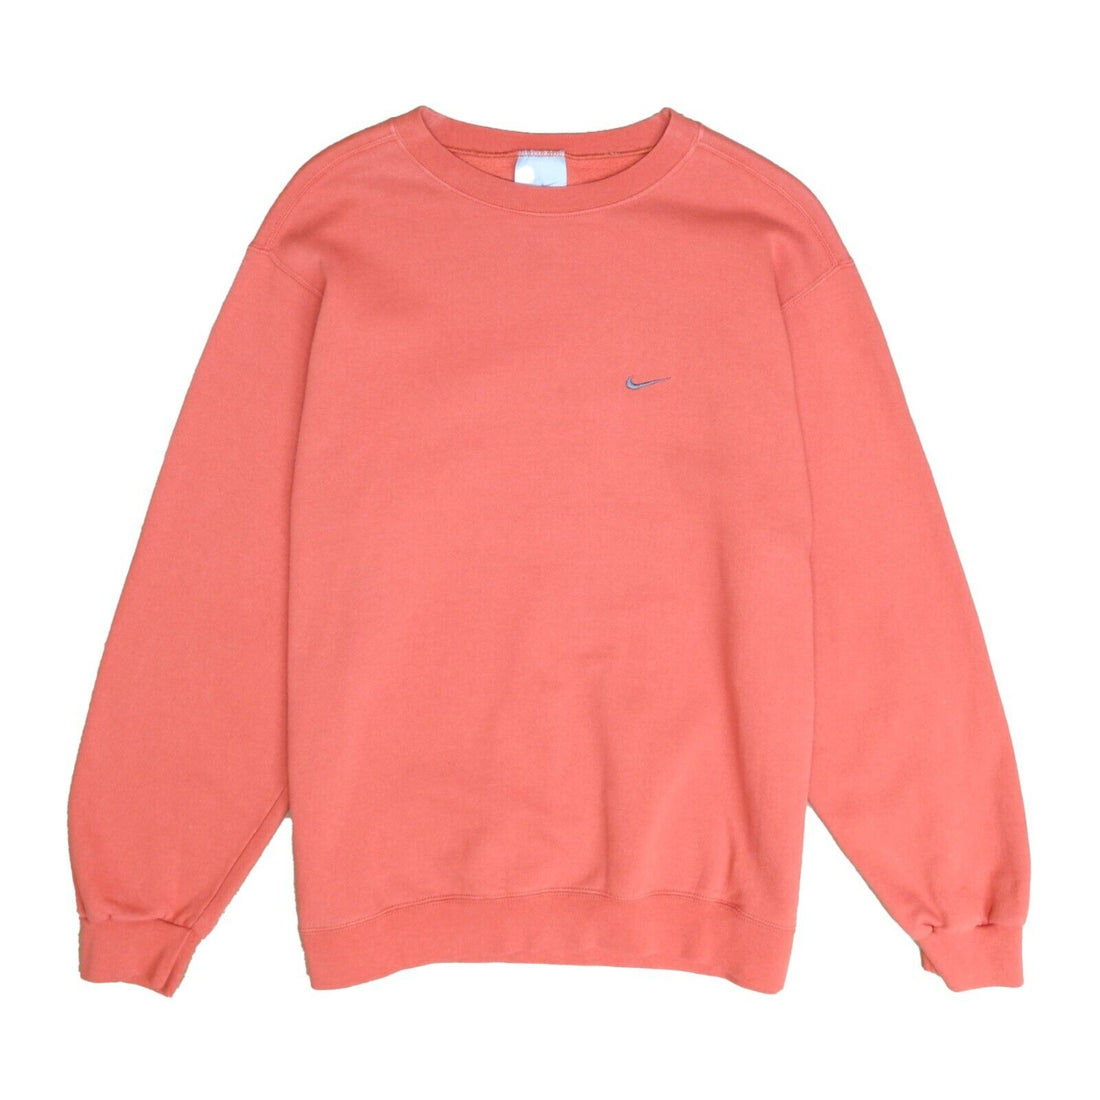 Vintage Nike Sweatshirt Crewneck Size Medium Orange Embroidered Swoosh